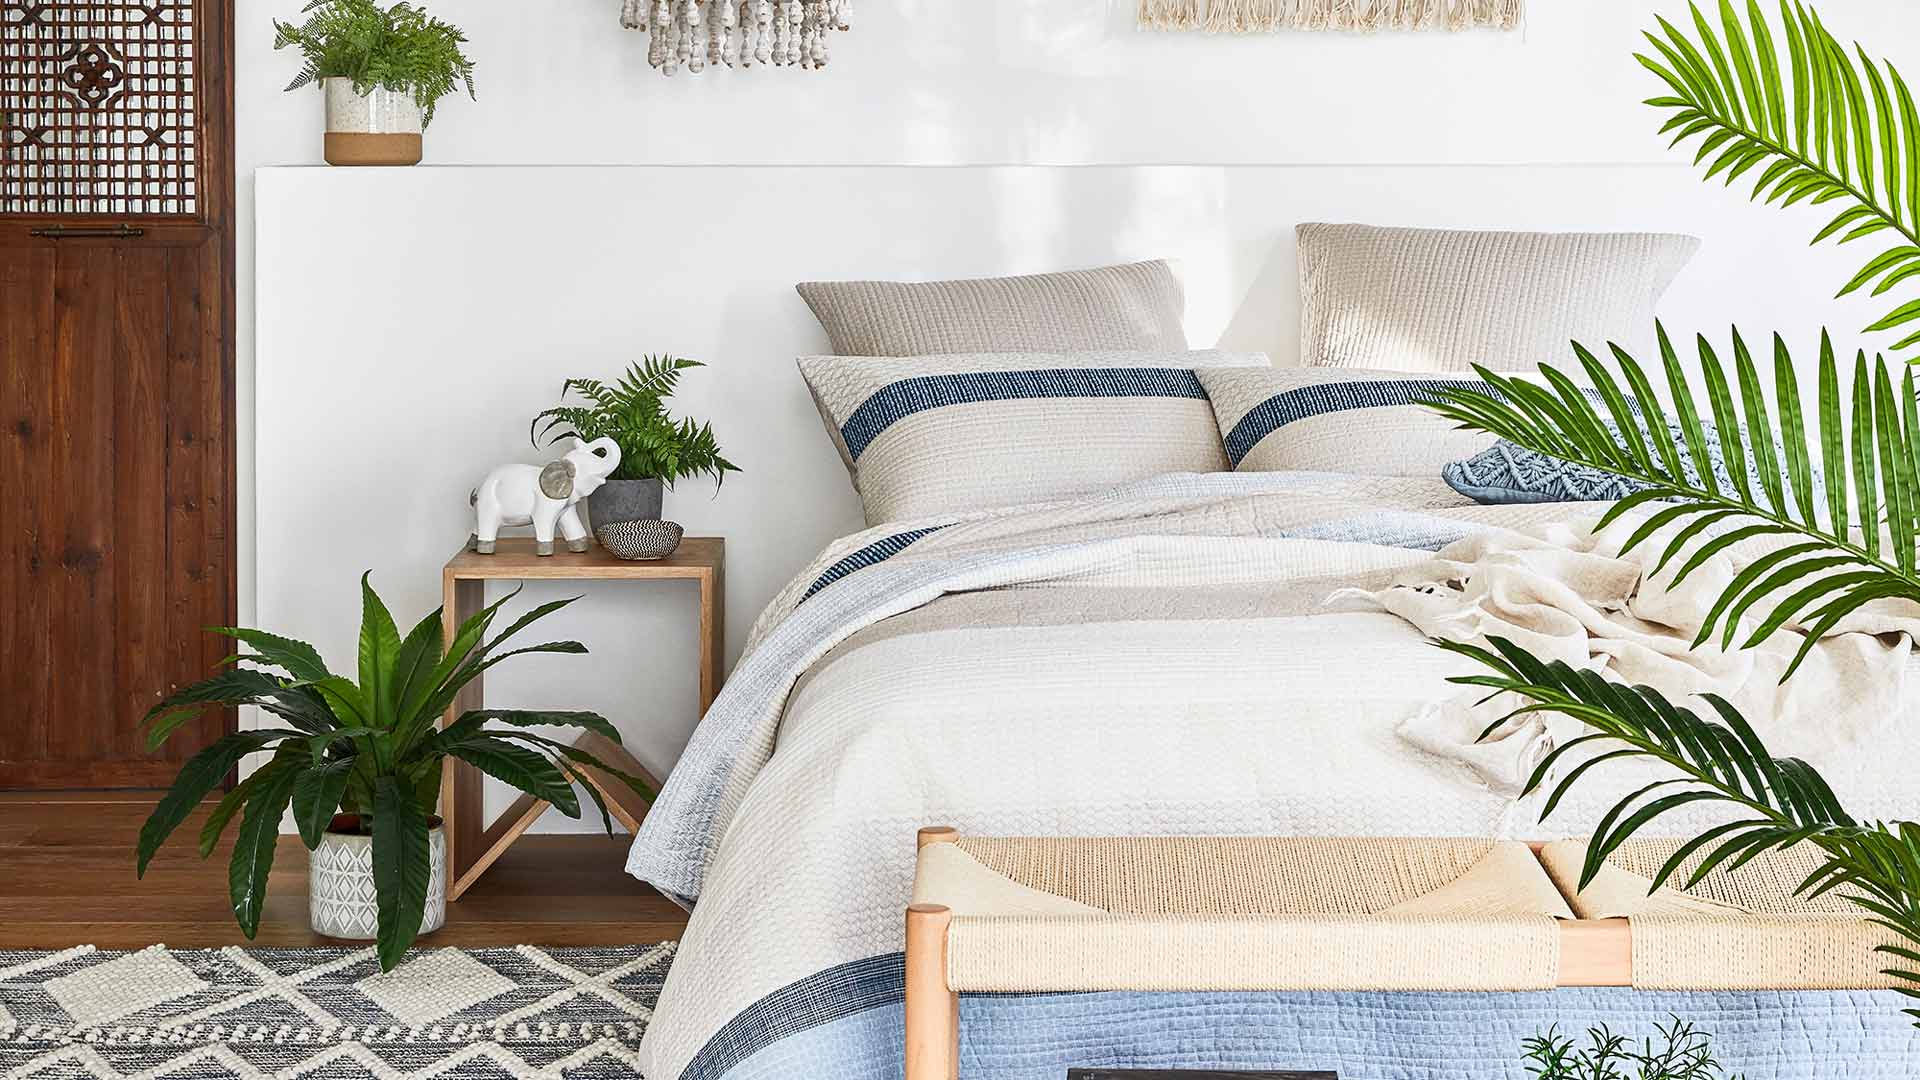 How plants in your bedroom improves your sleep